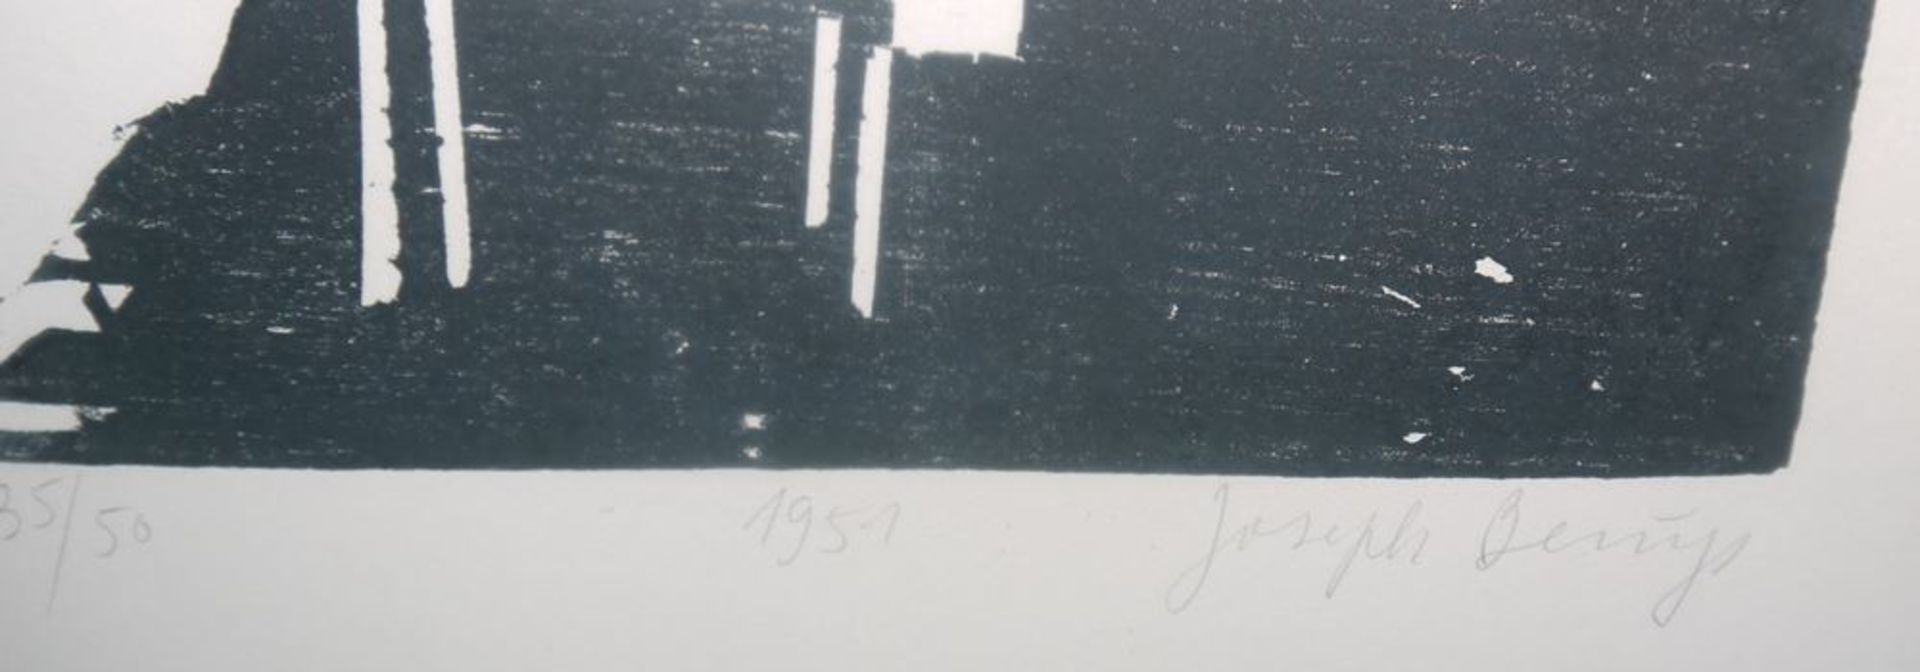 Joseph Beuys, Esse 1951, Holzschnitt, später Abzug 1973-74 - Bild 2 aus 3